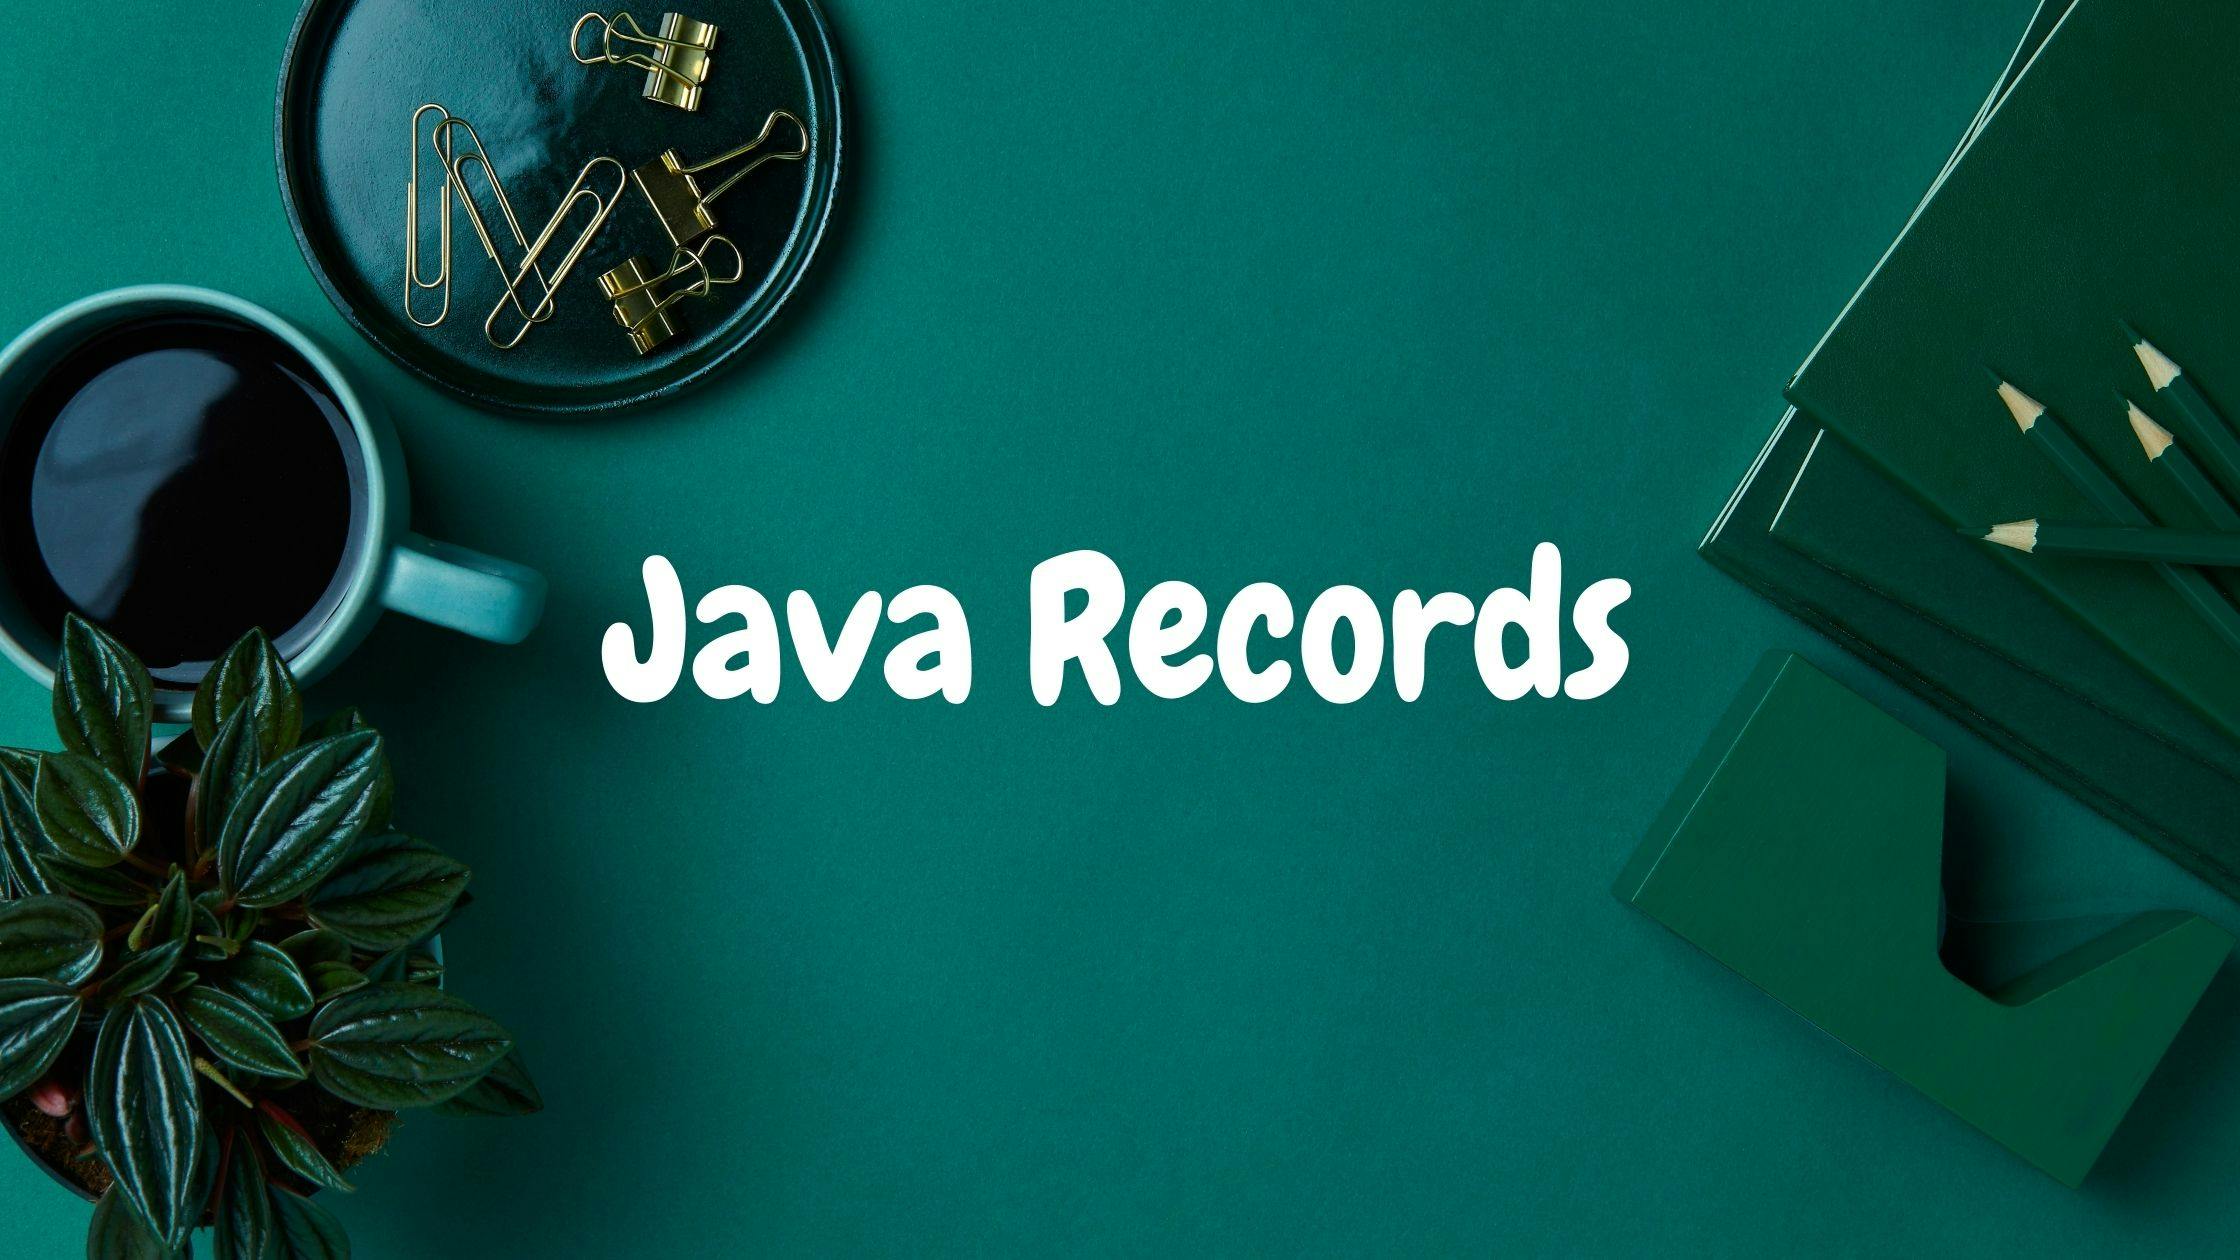 Java Record banner image